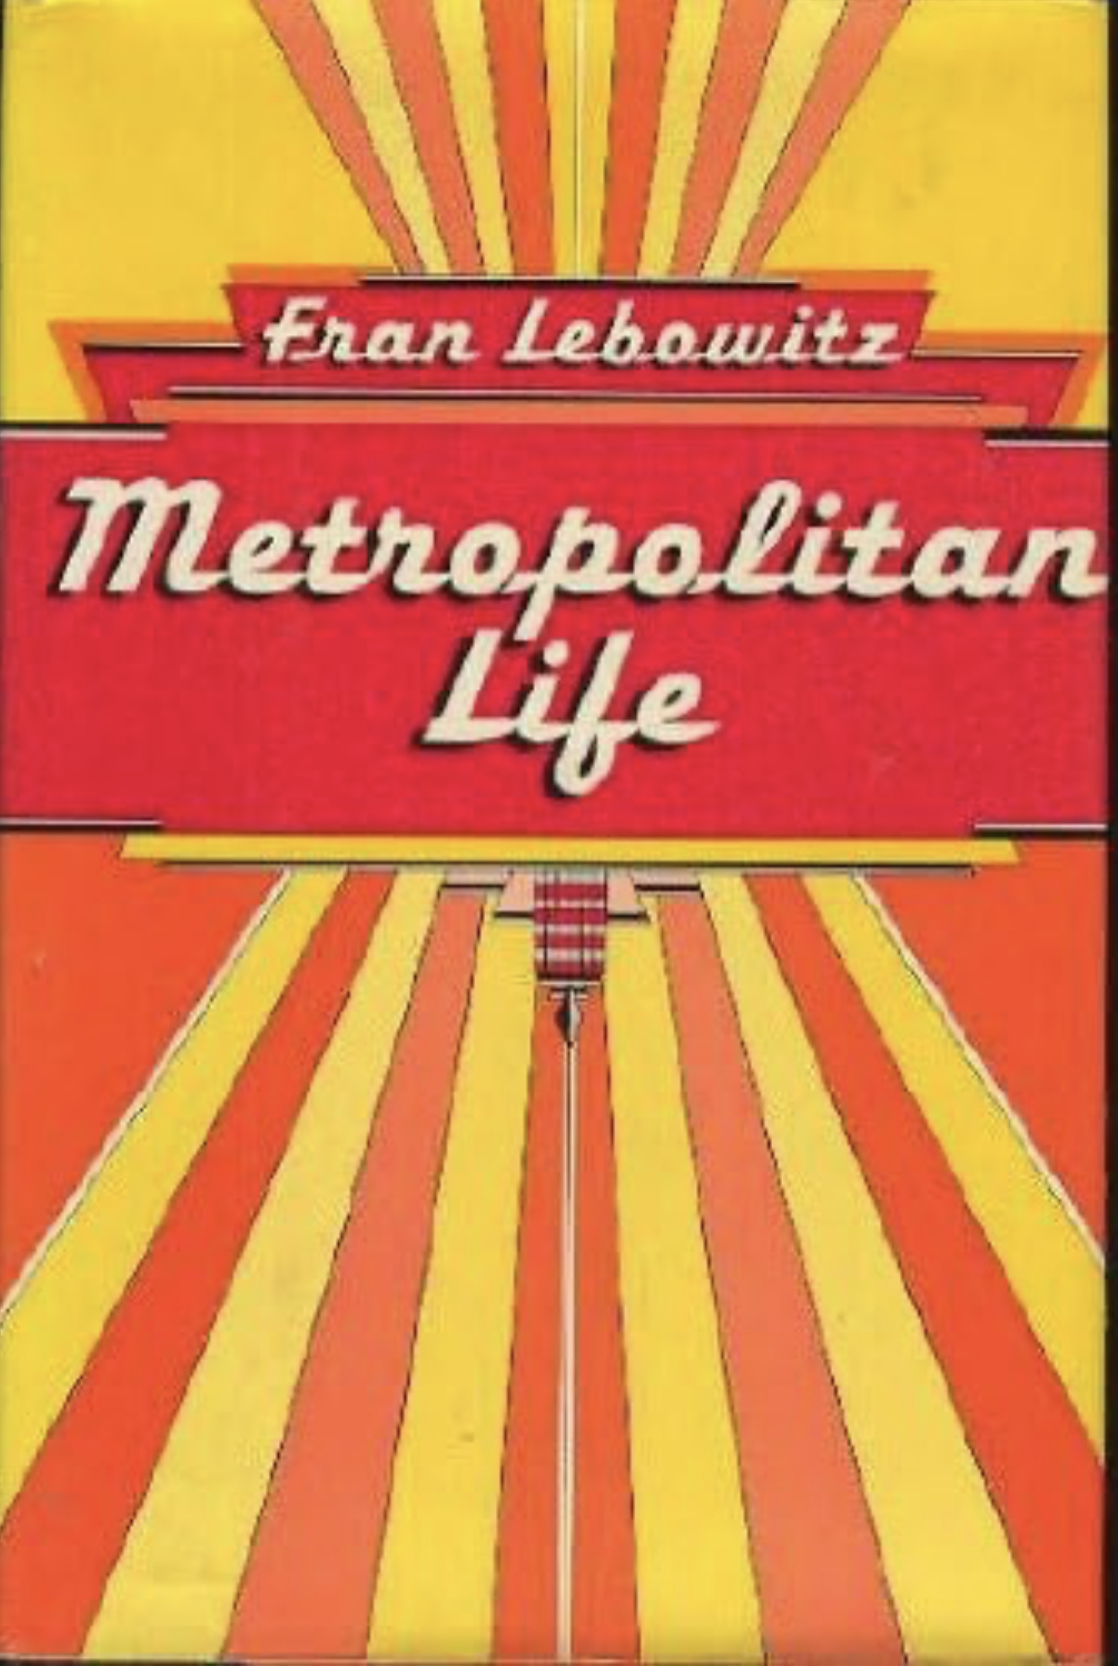 Fran Lebowitz: Metropolitan life (1978, Dutton)